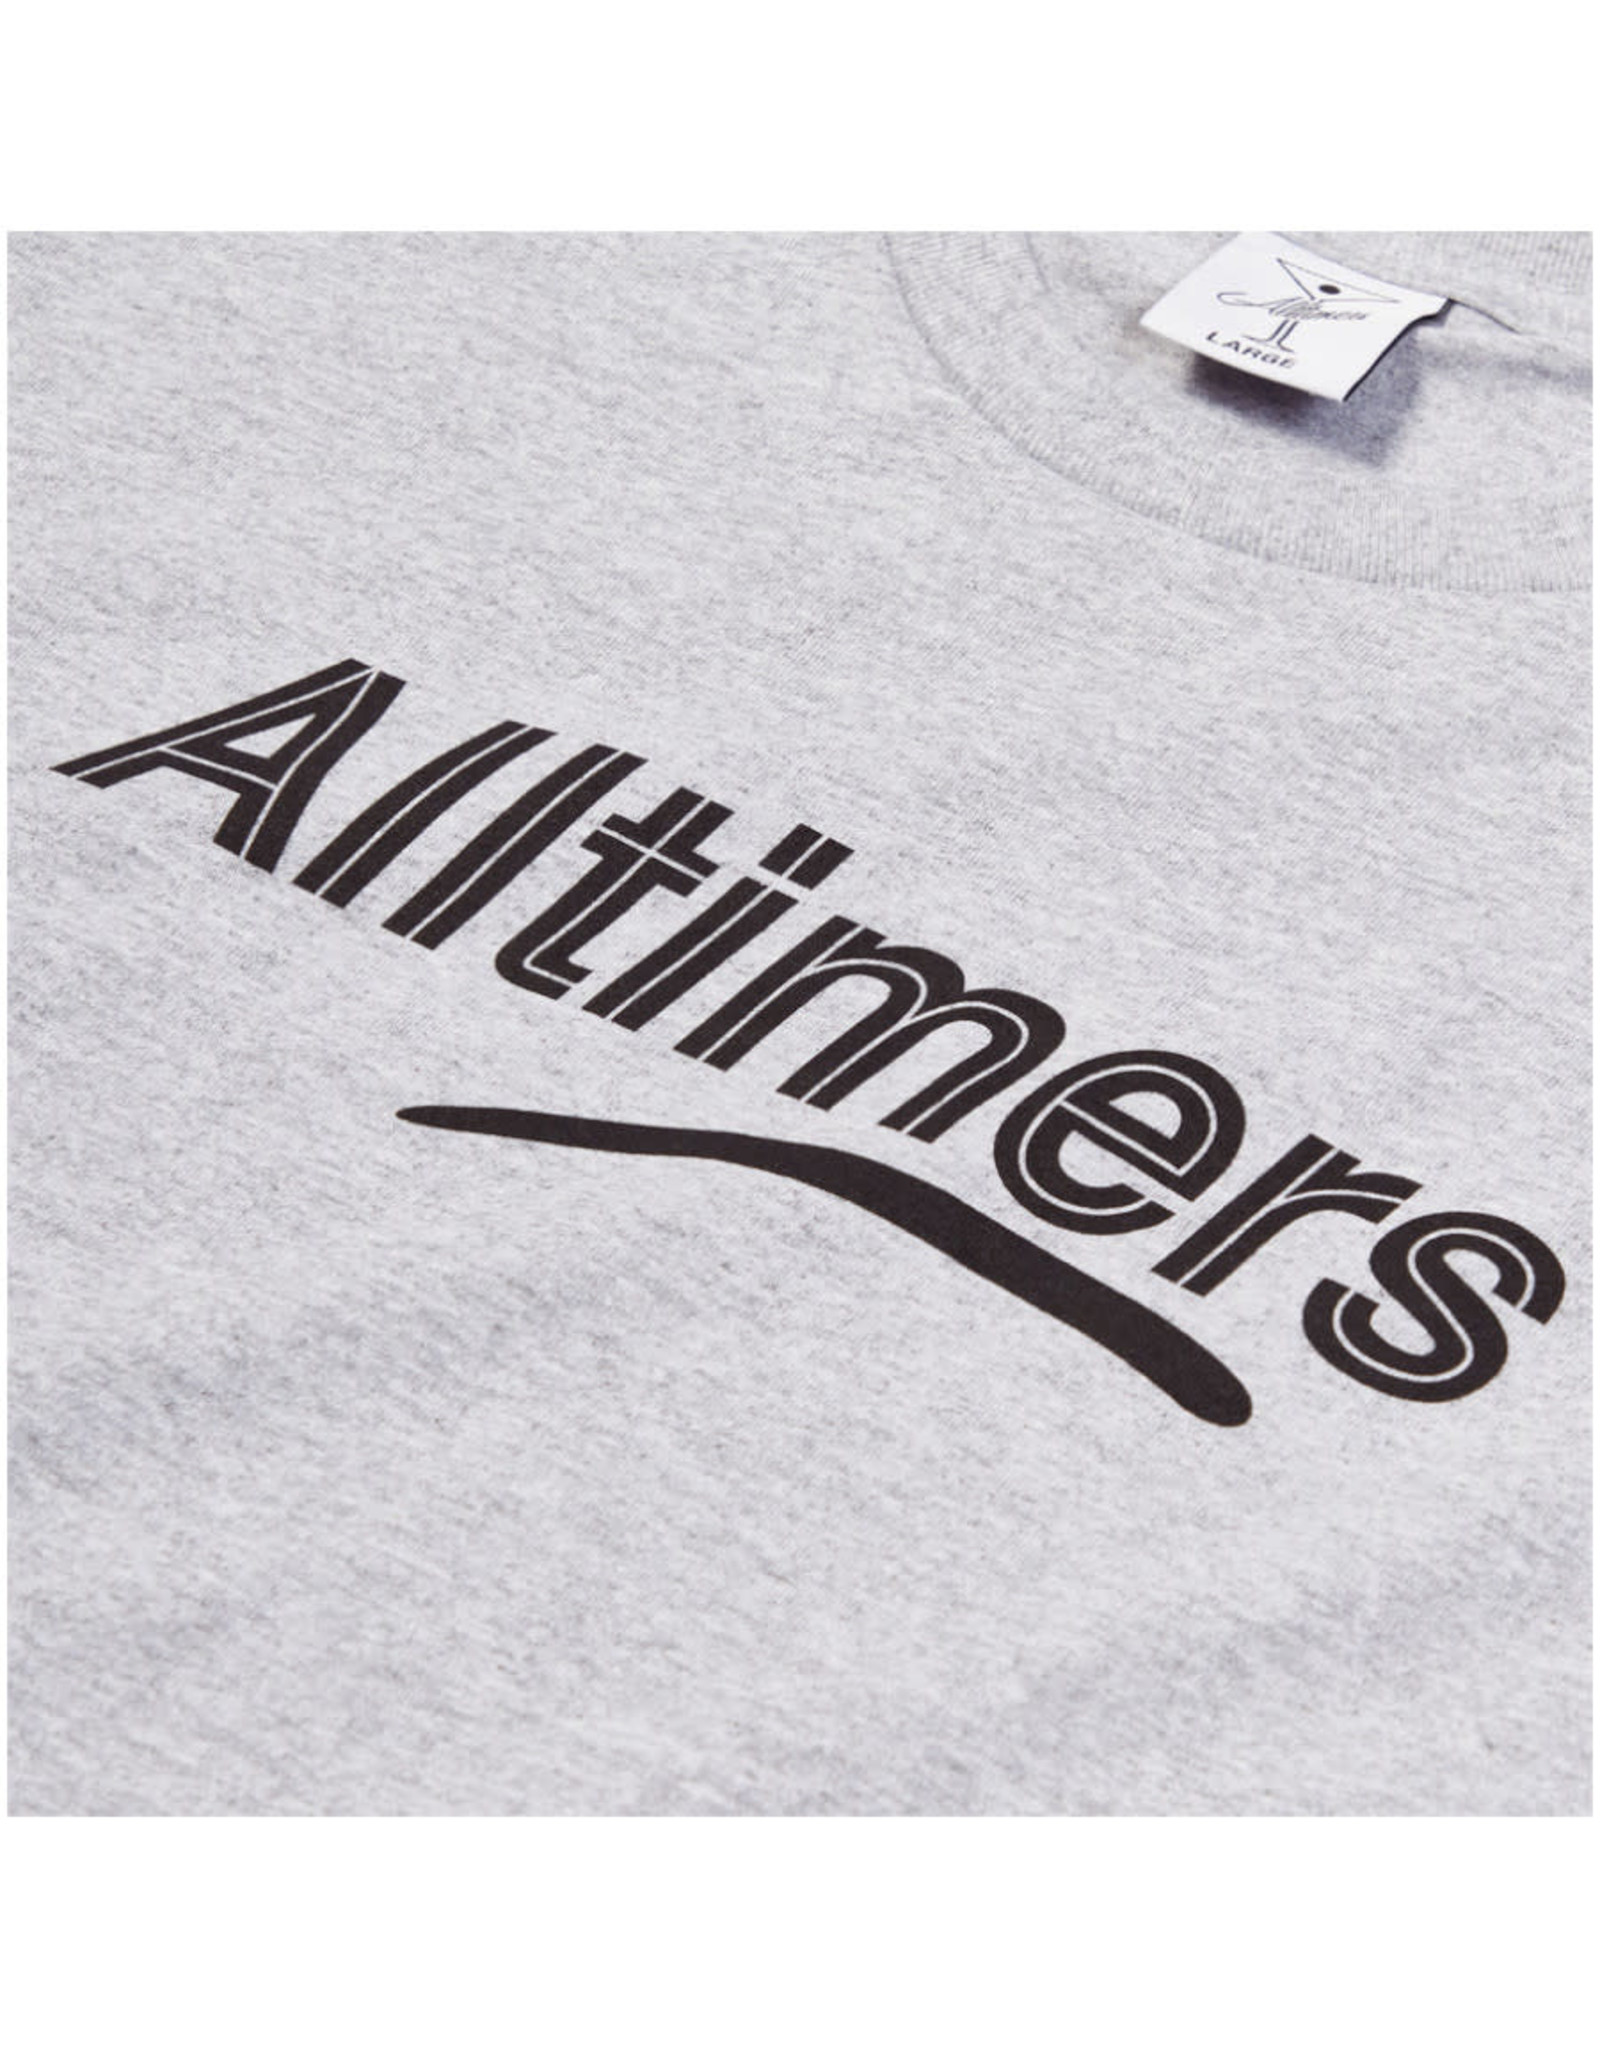 Alltimers Alltimers Tee Estate S/S (Heather Grey)